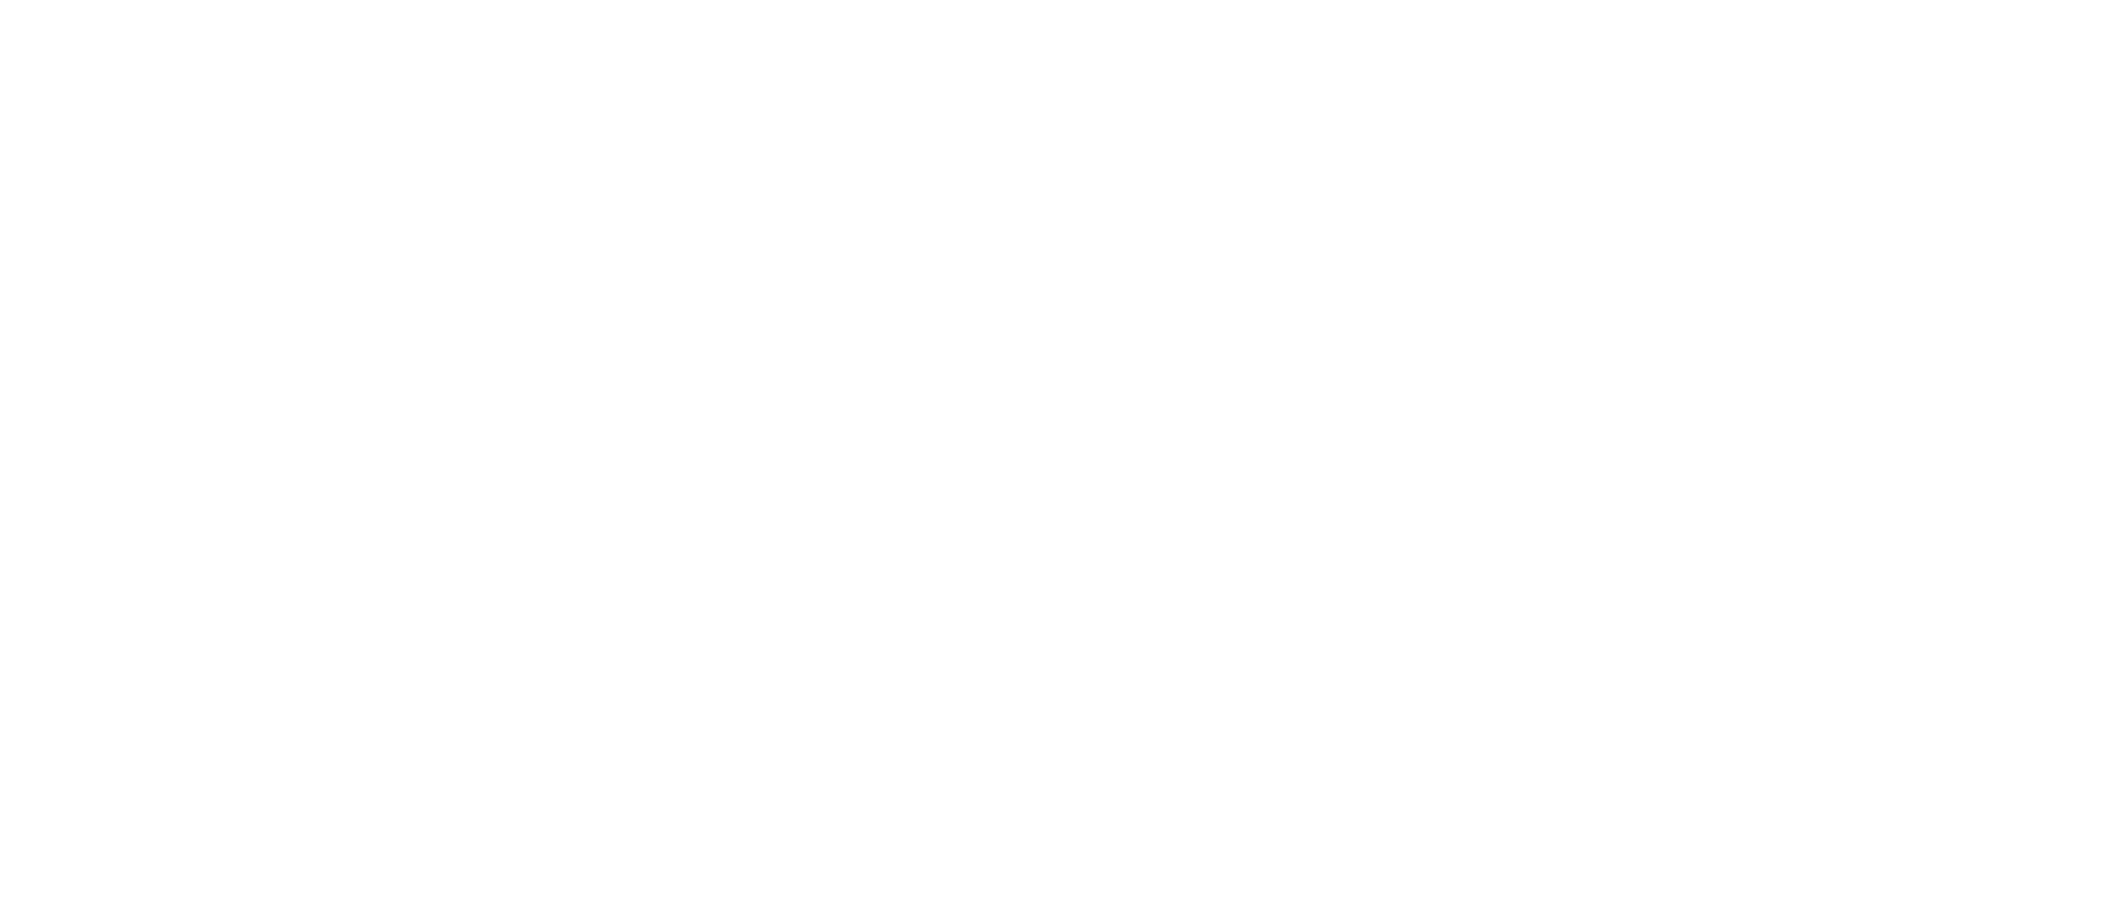 SMT logo EPS 01 wit